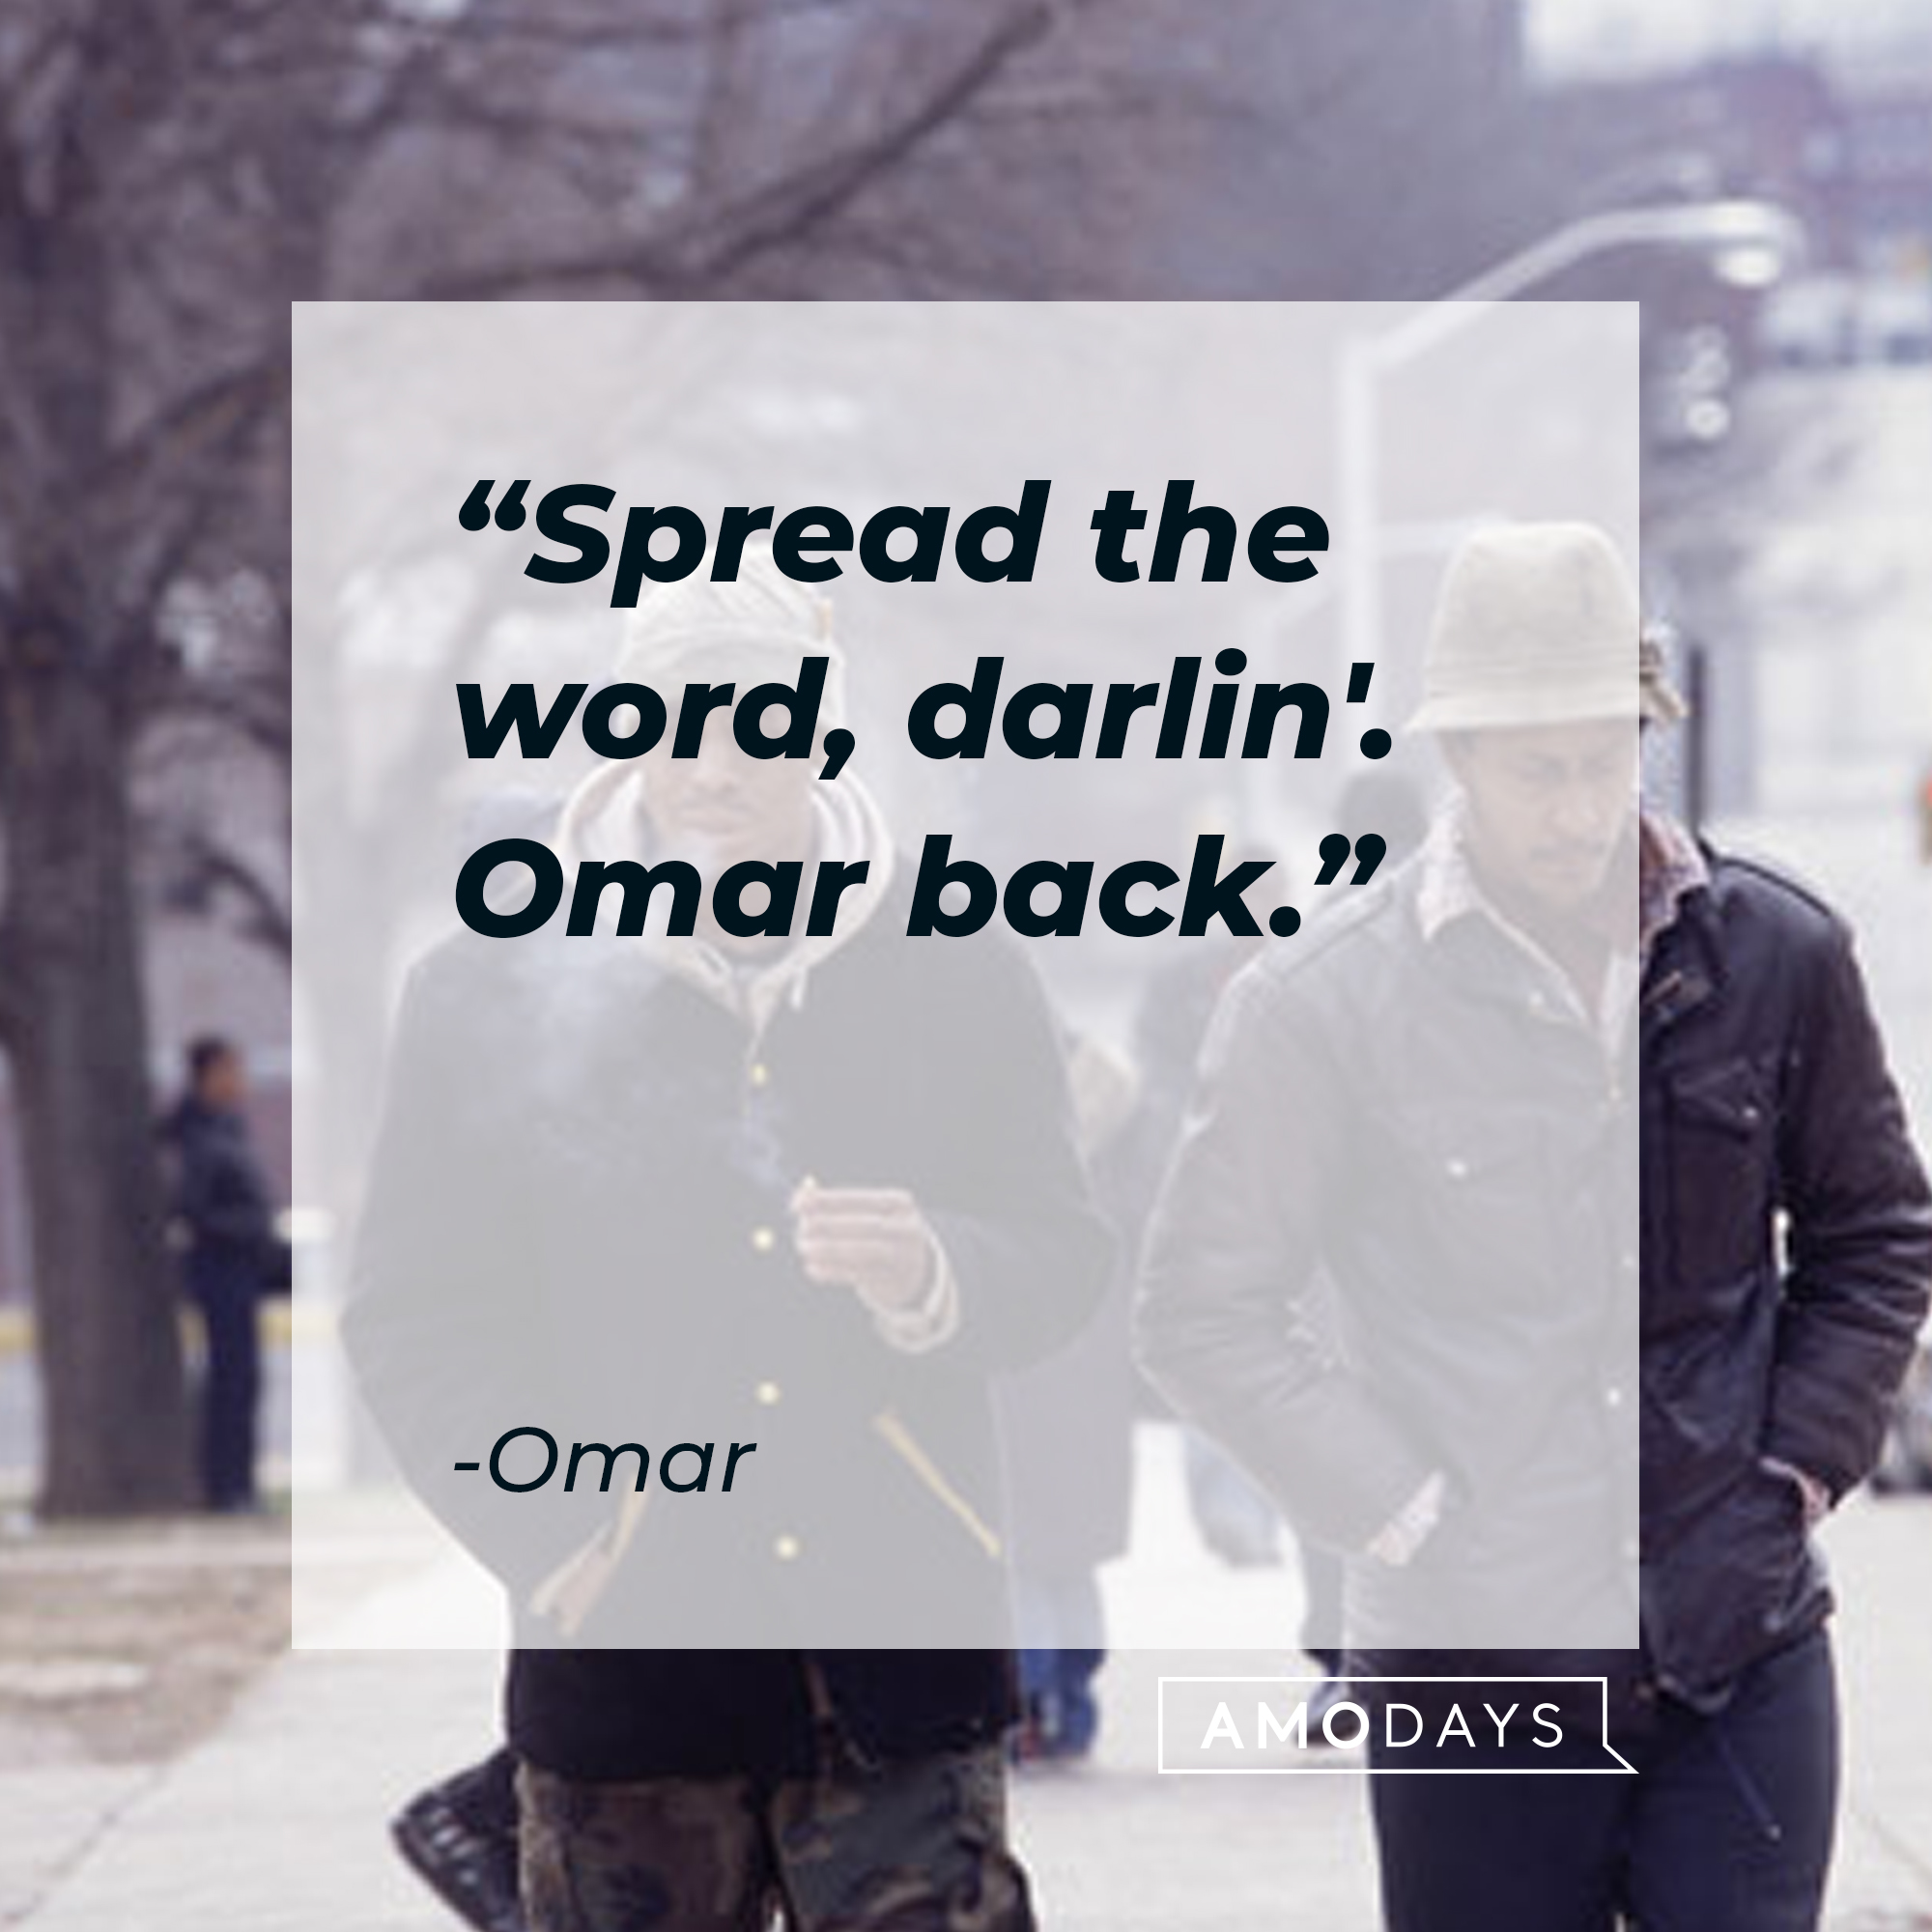 Omar's quote: "Spread the word, darlin'. Omar back." | Source: facebook.com/TheWire